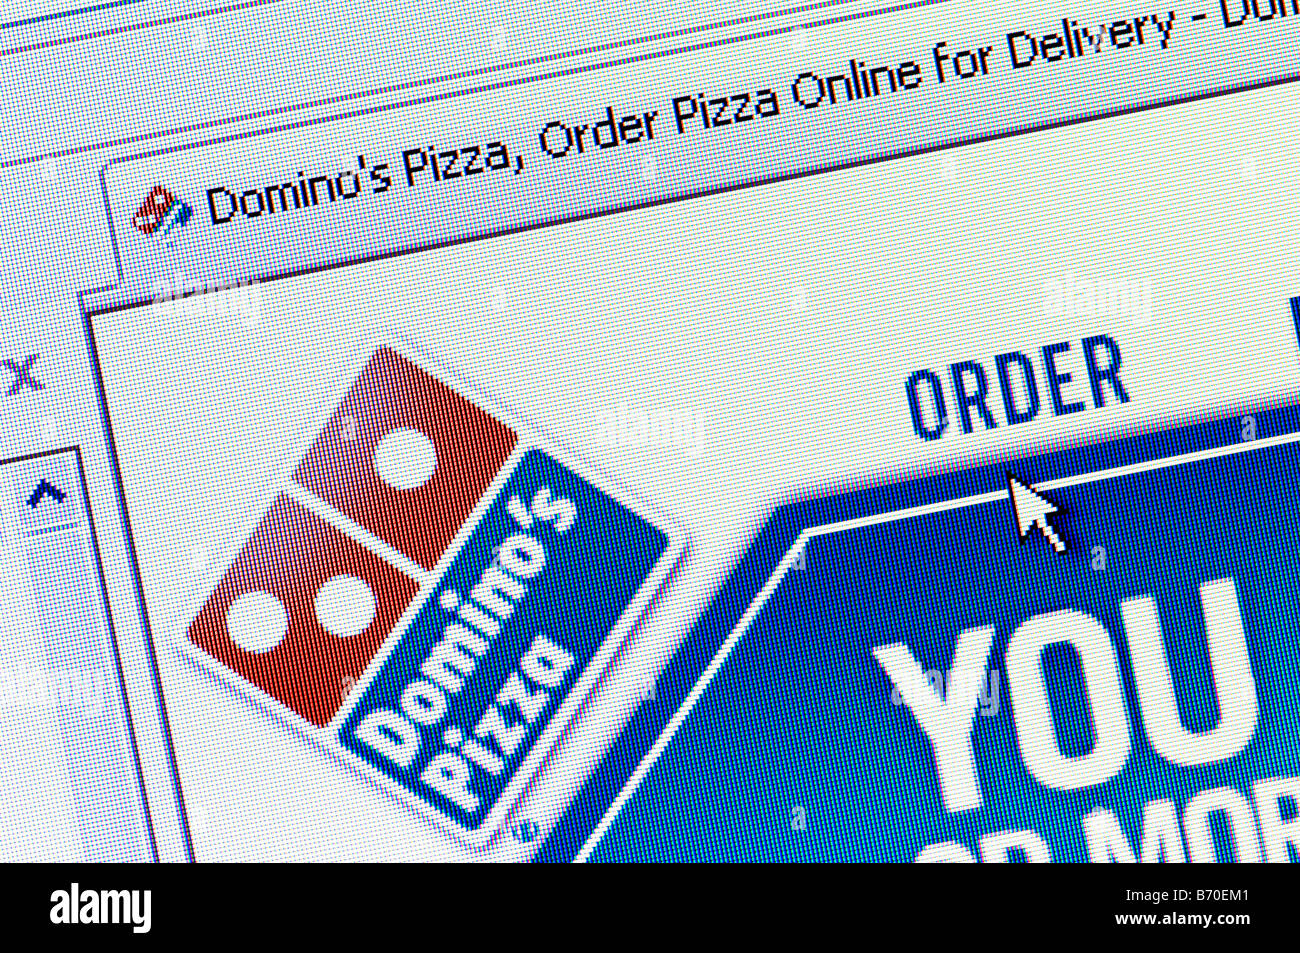 Dominos online order